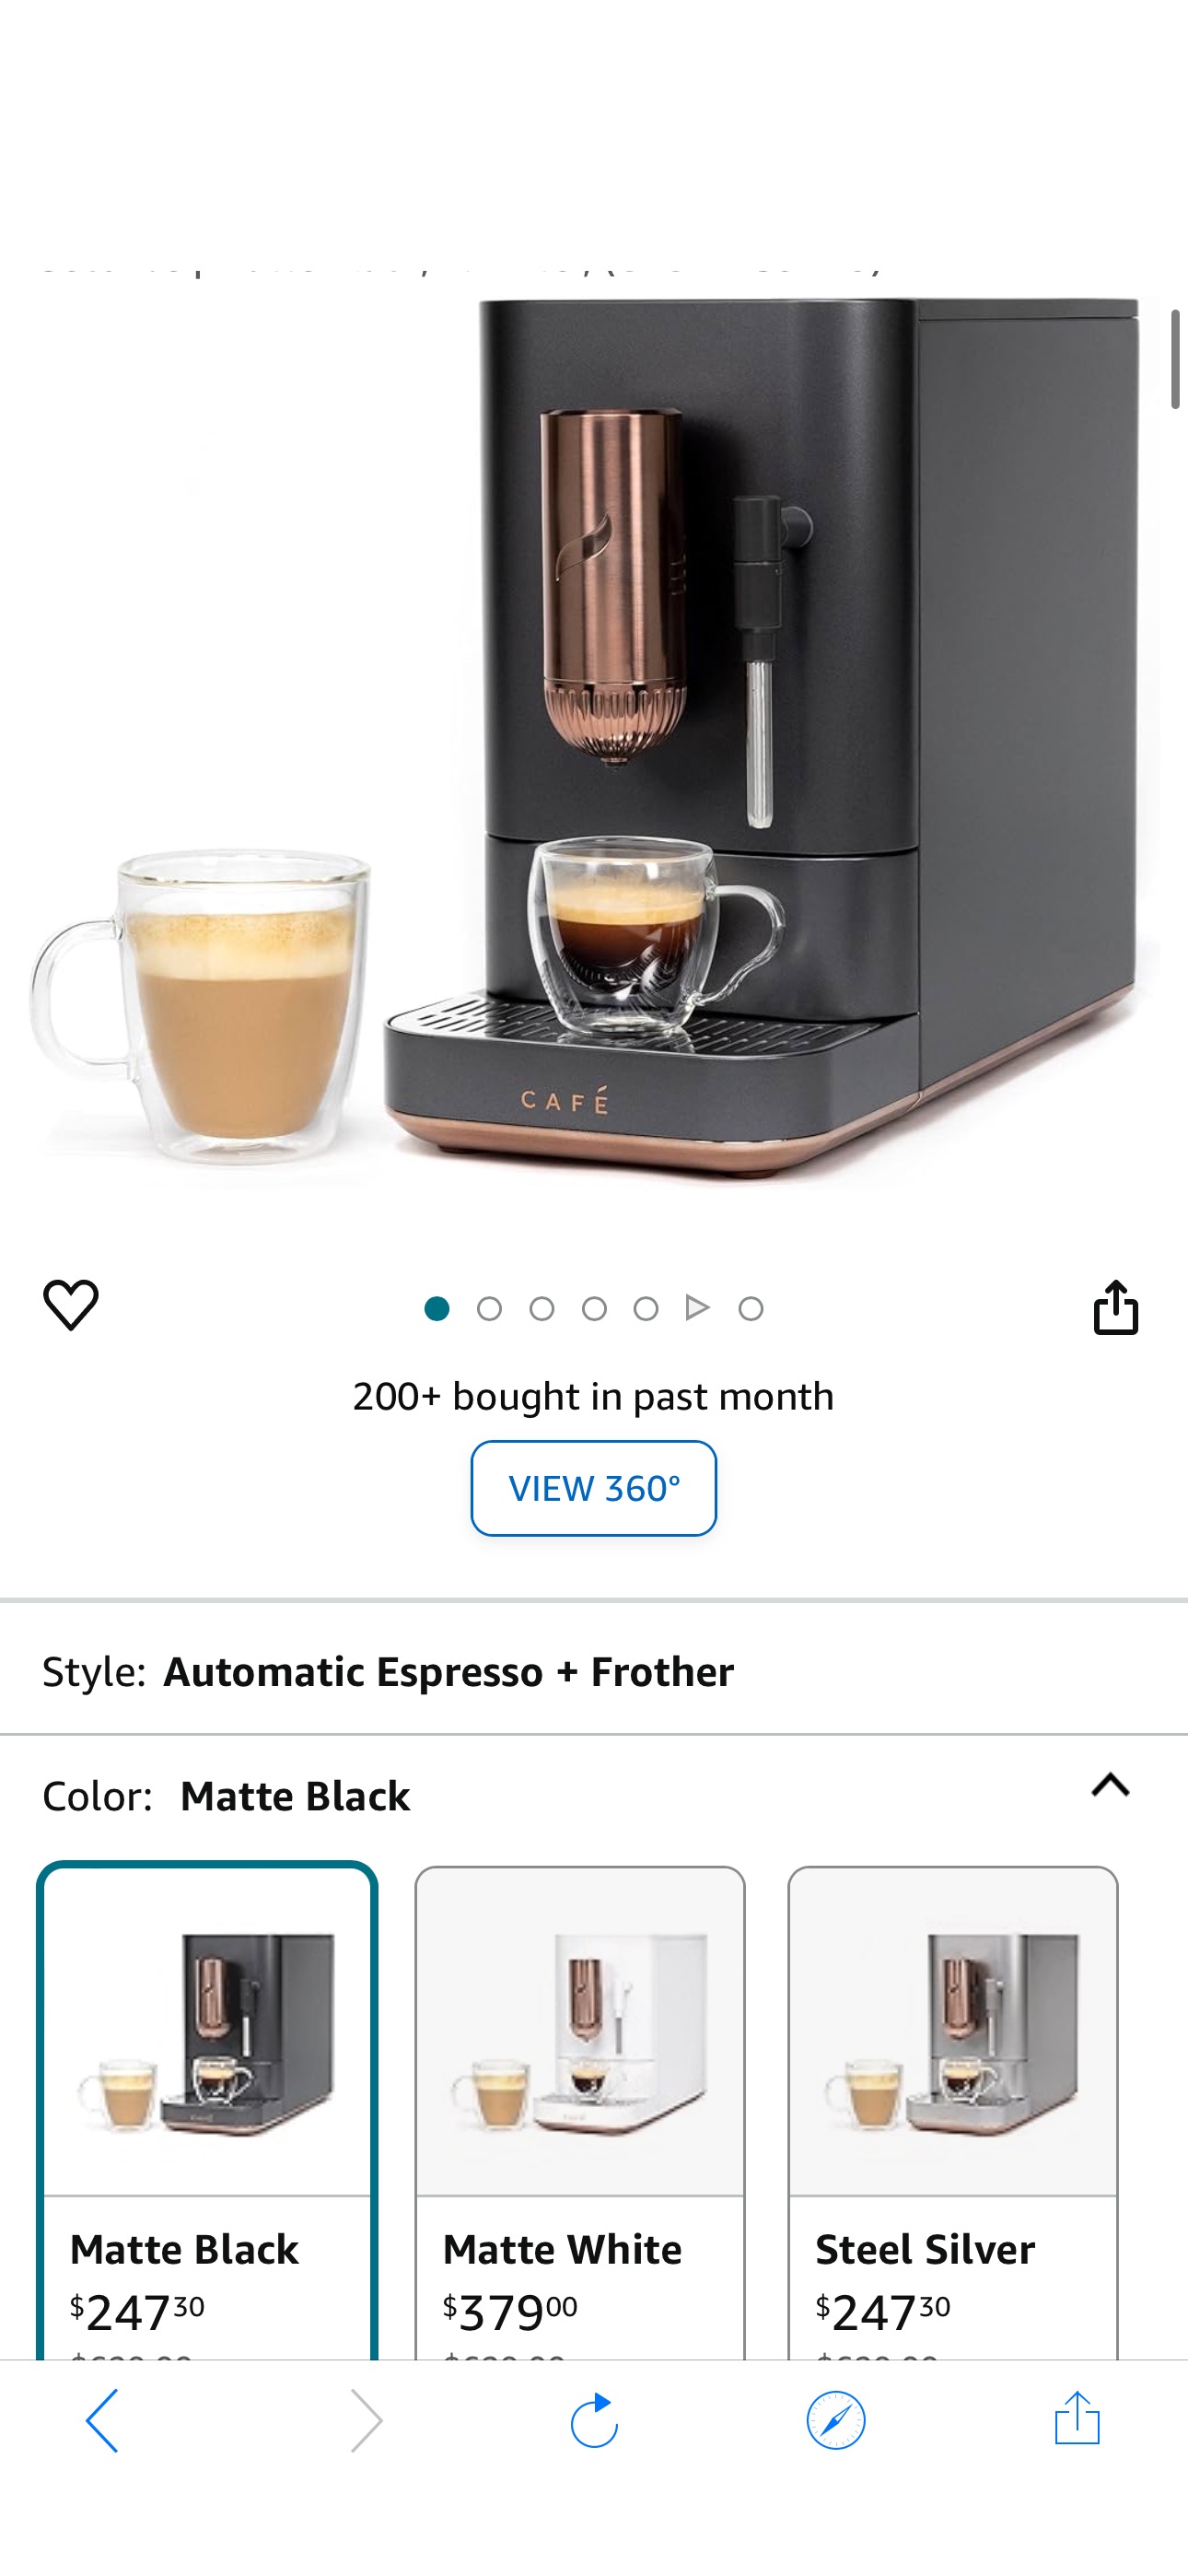 Amazon.com: Café Affetto Automatic Espresso Machine + Milk Frother | Built-In & Adjustable Espresso Bean Grinder | One-Touch Brew in 90 Seconds | Matte Black, 1.2 Liter, (C7CEBBS3RD3): Home & Kitchen